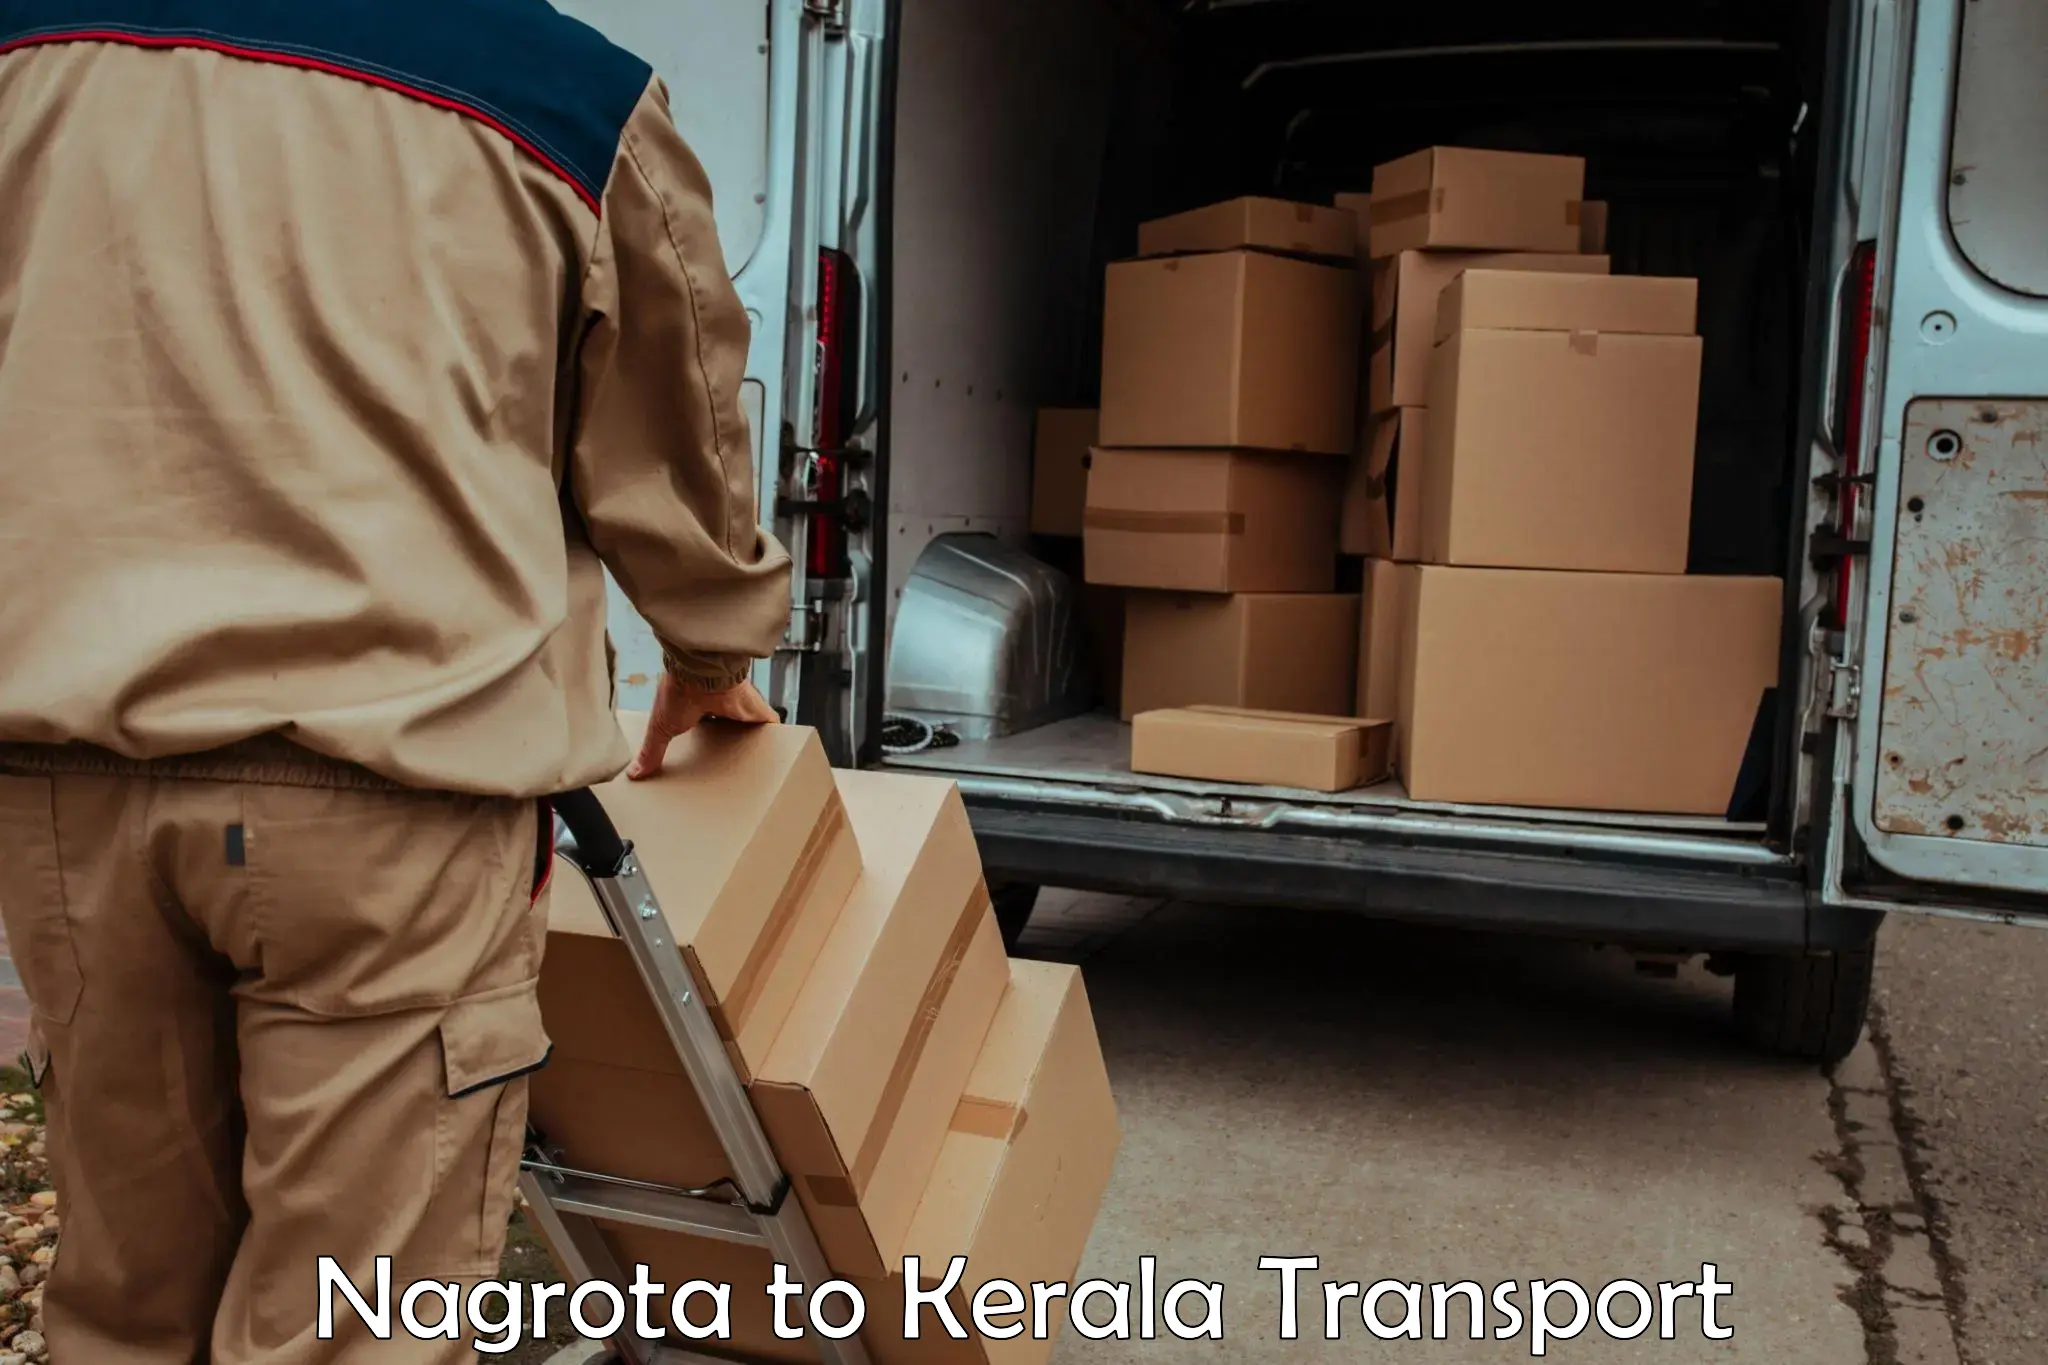 Daily transport service Nagrota to Koothattukulam